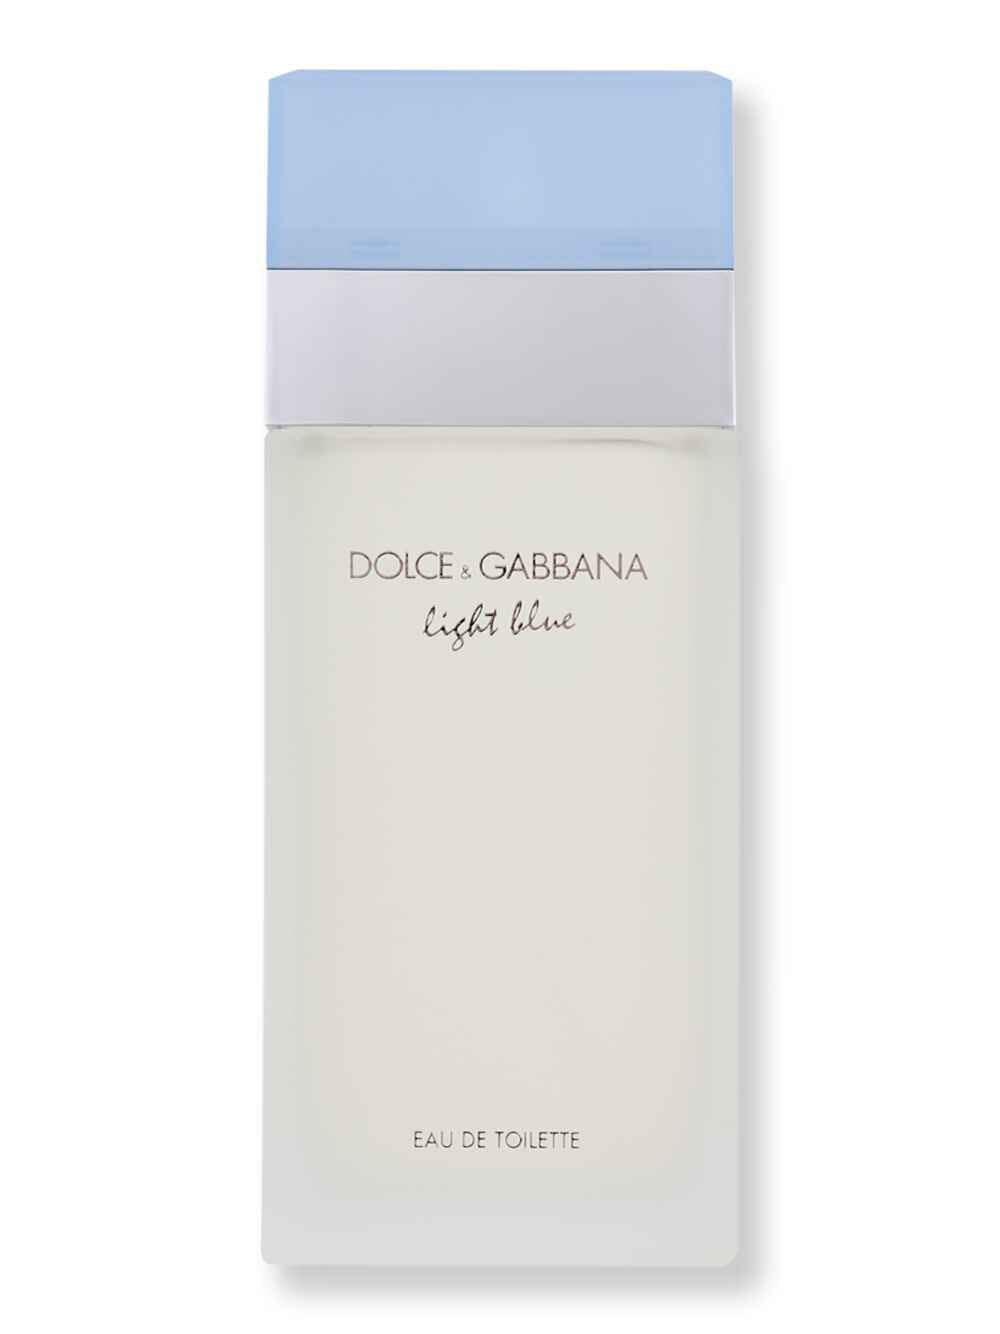 Dolce & Gabbana Dolce & Gabbana Light Blue EDT 3.4 oz Perfume 